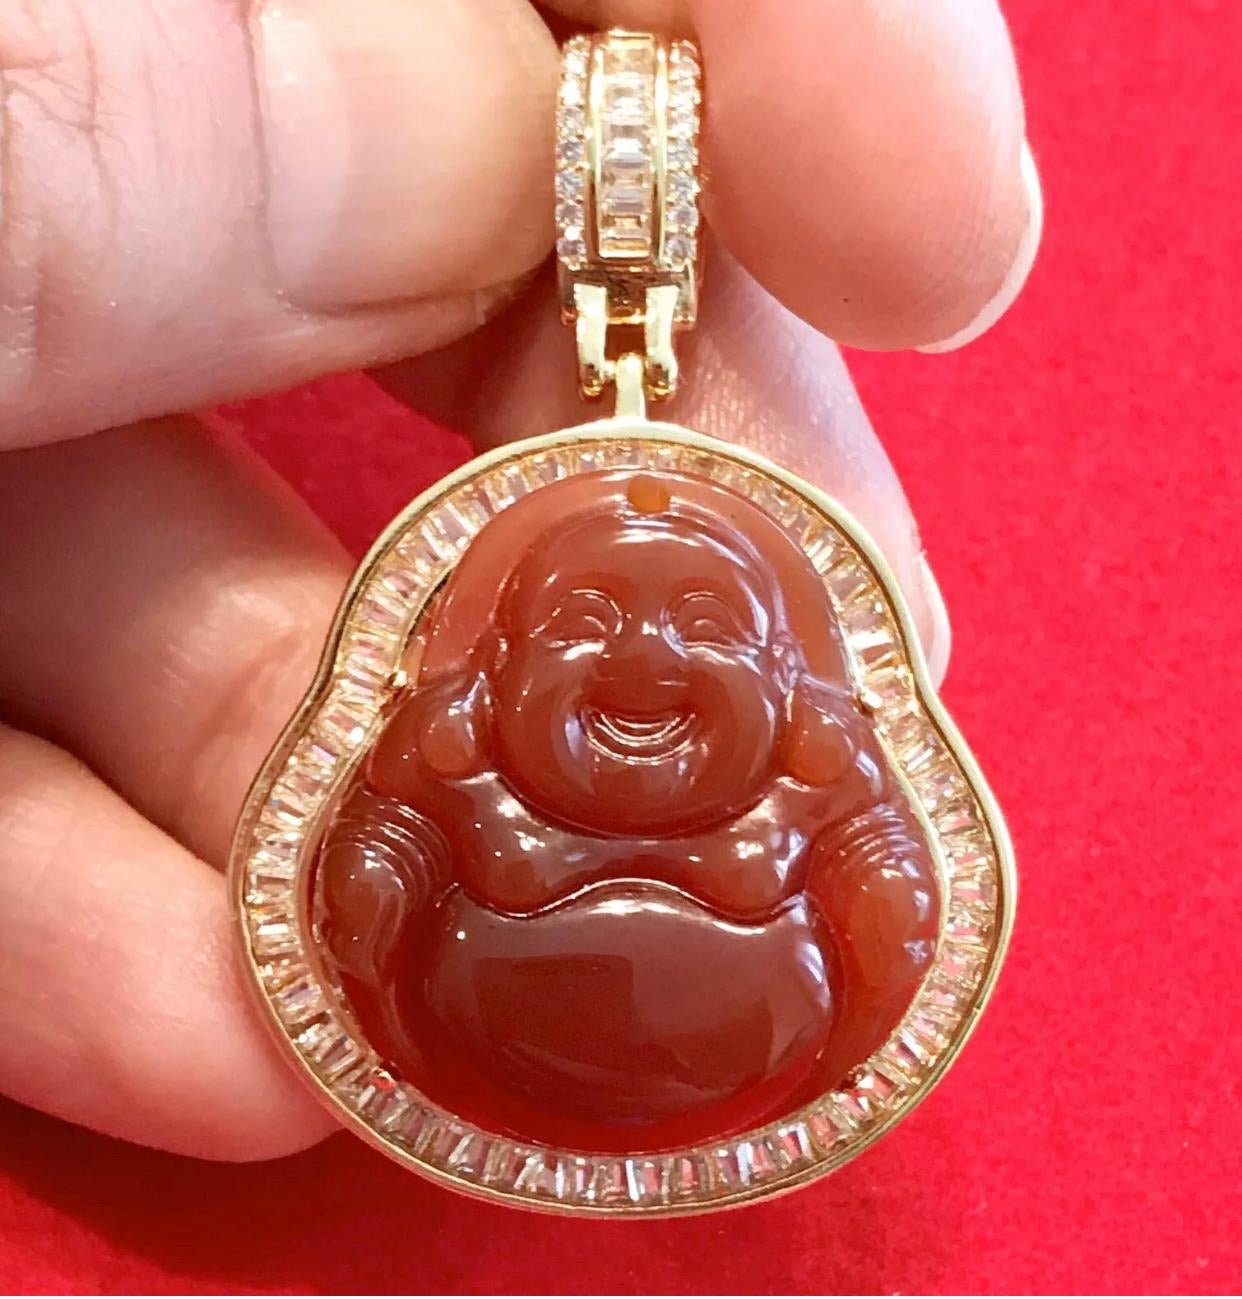 Buddha Pendant and Necklace